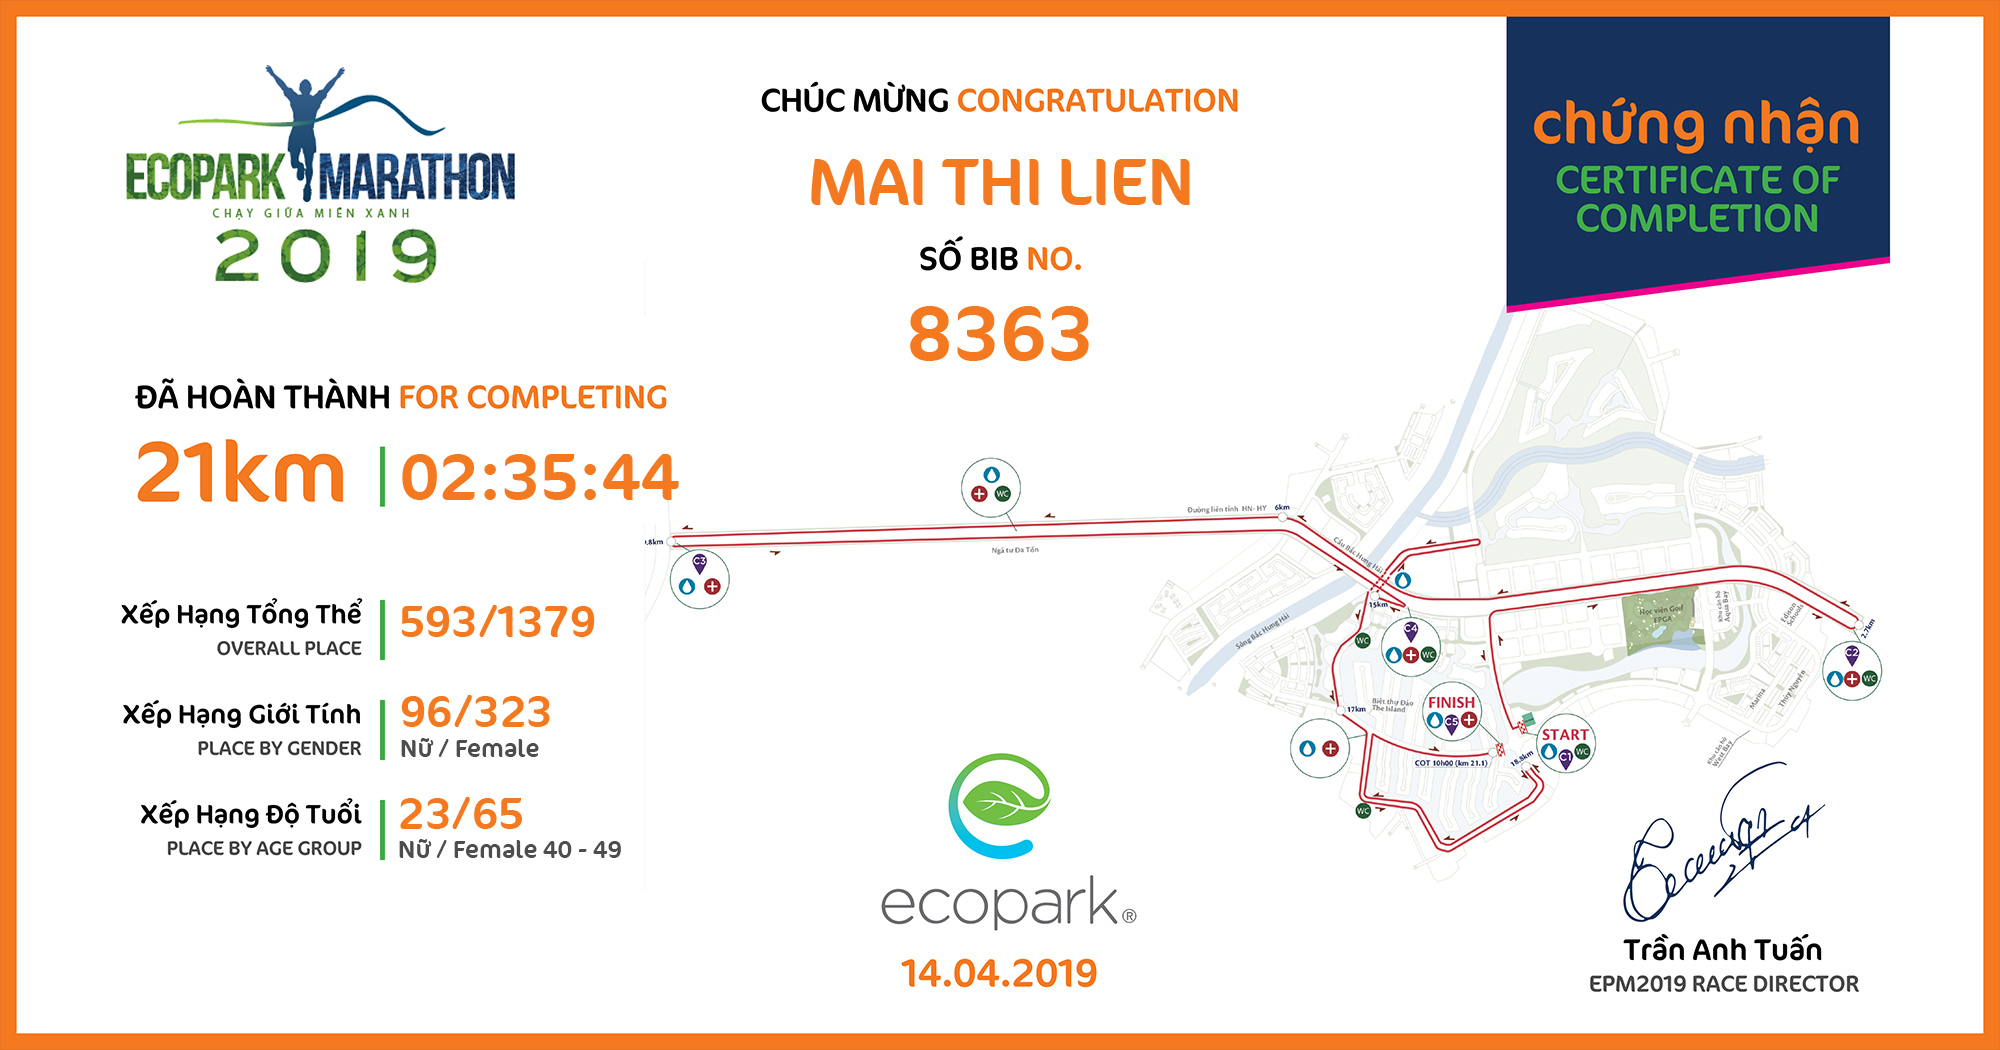 8363 - Mai Thi Lien